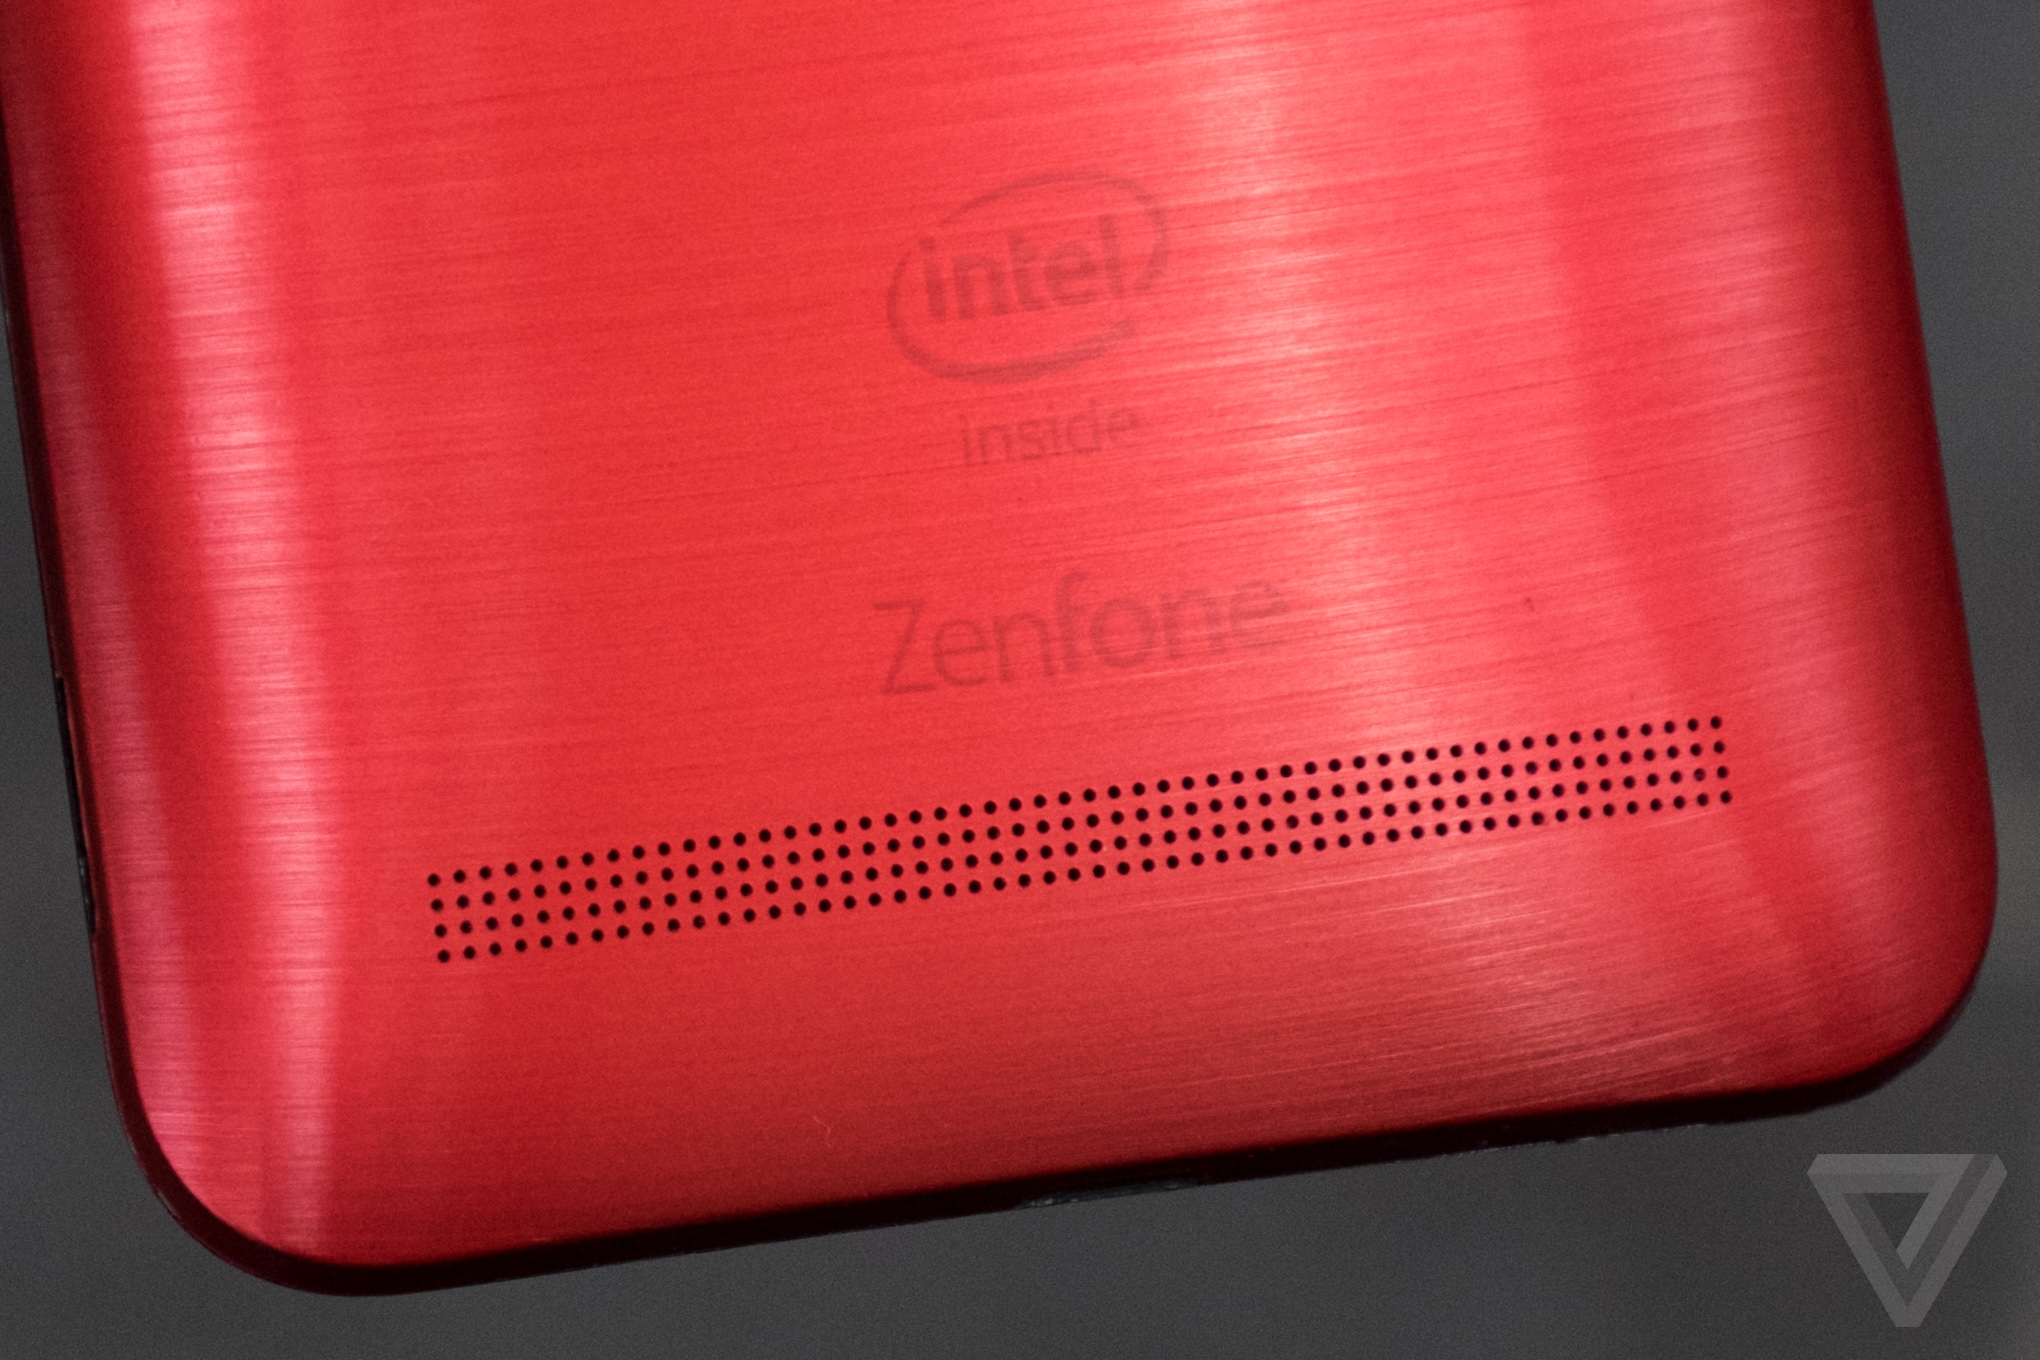 ZenFone 2 review